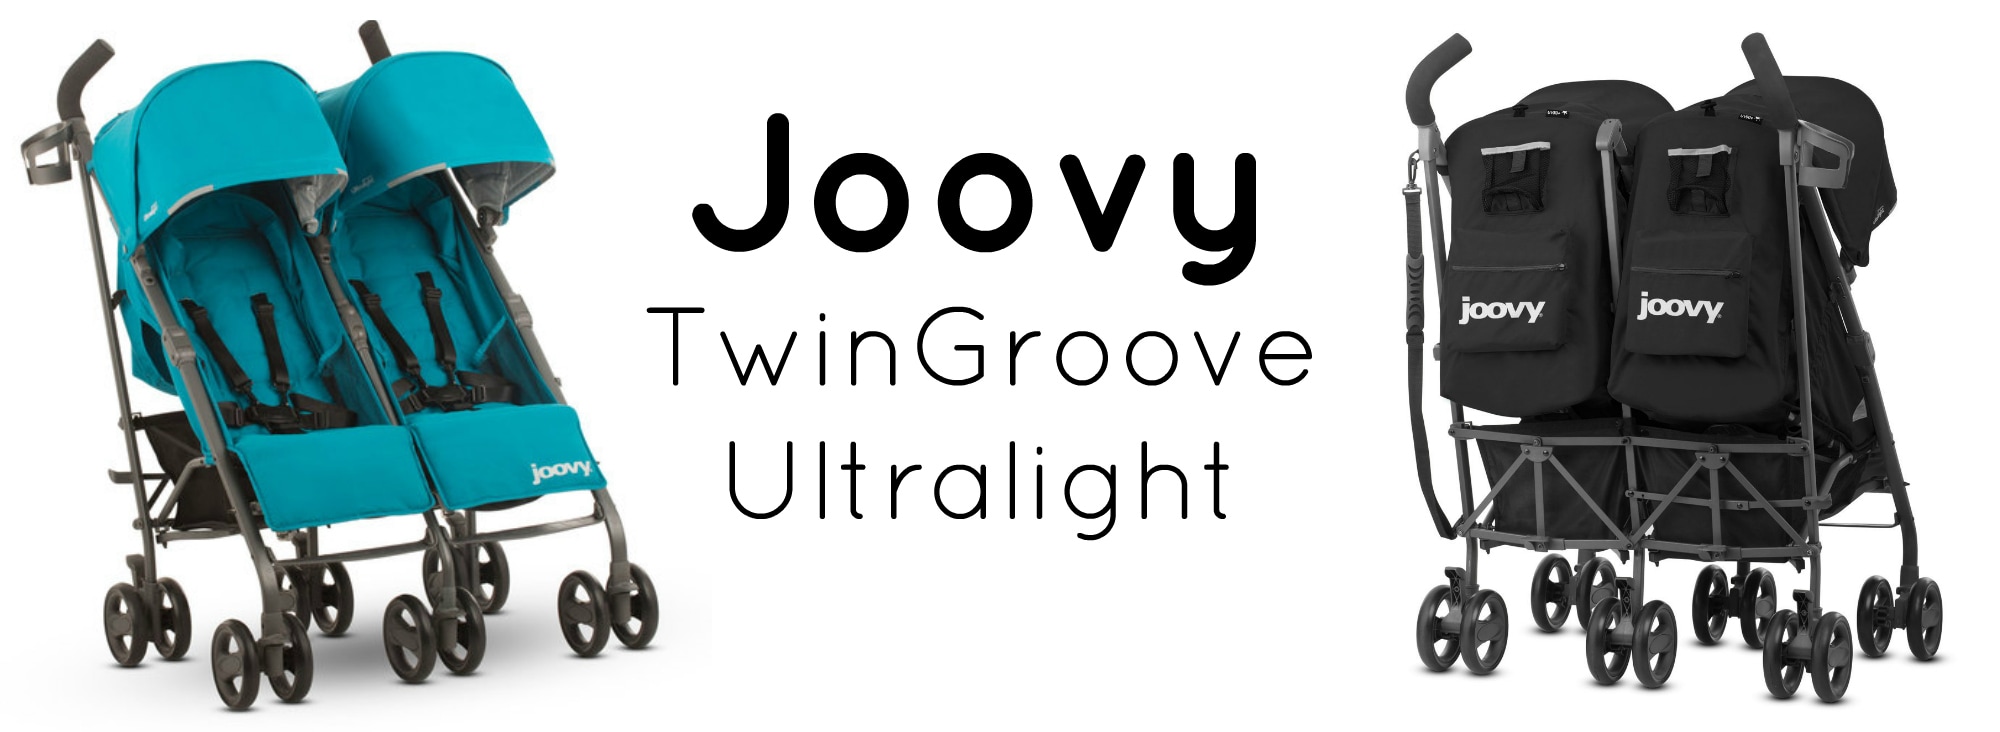 joovy groove twin